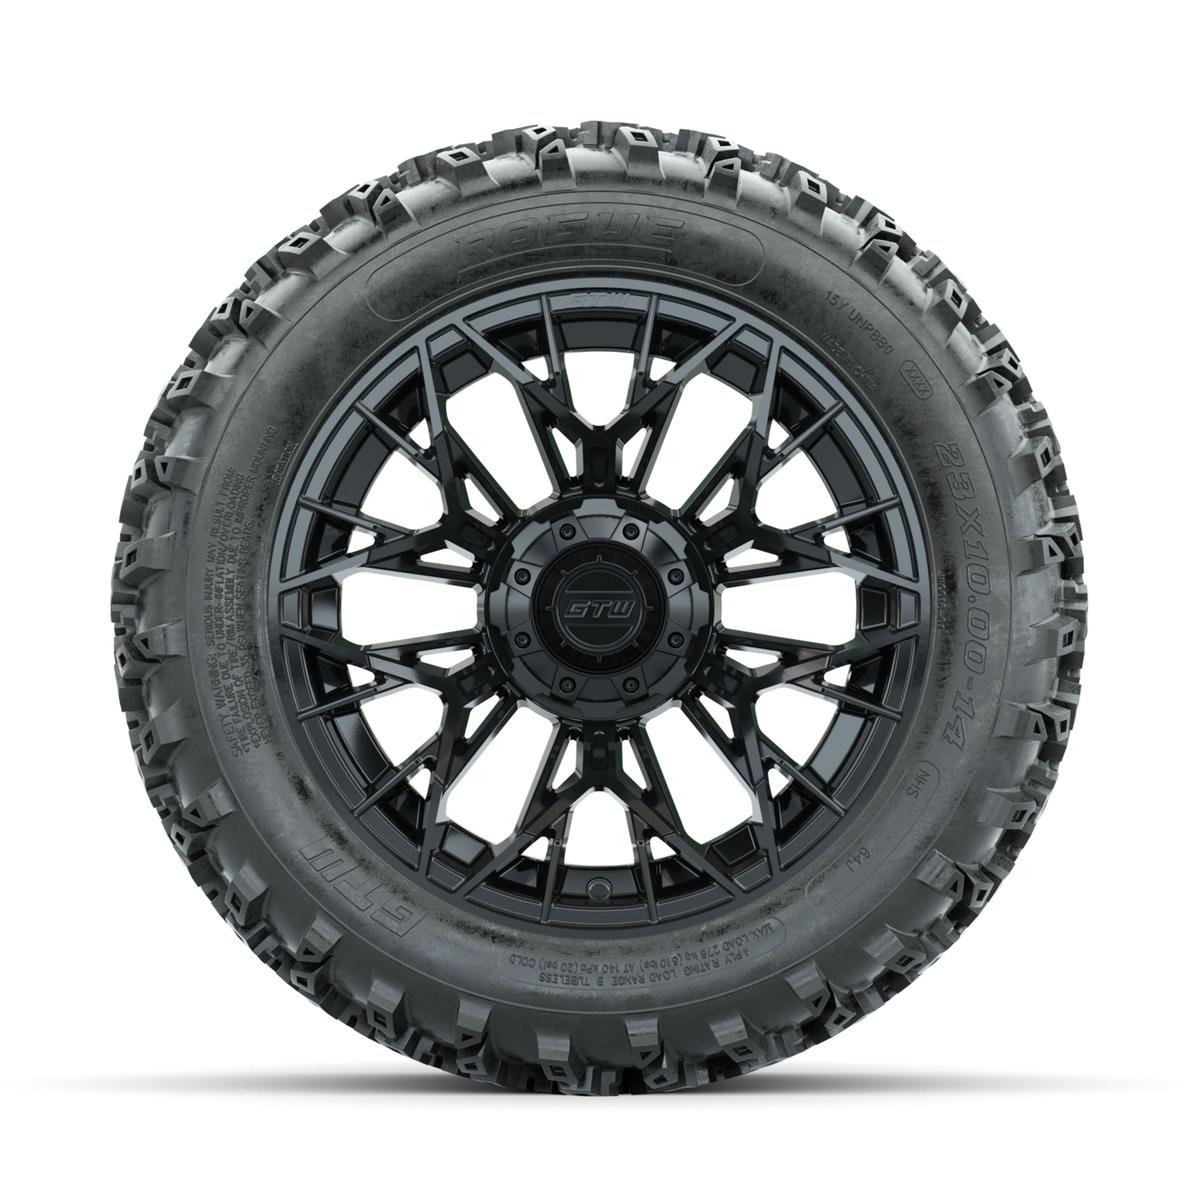 GTW Stellar Black 14 in Wheels with 23x10.00-14 Rogue All Terrain Tires – Full Set